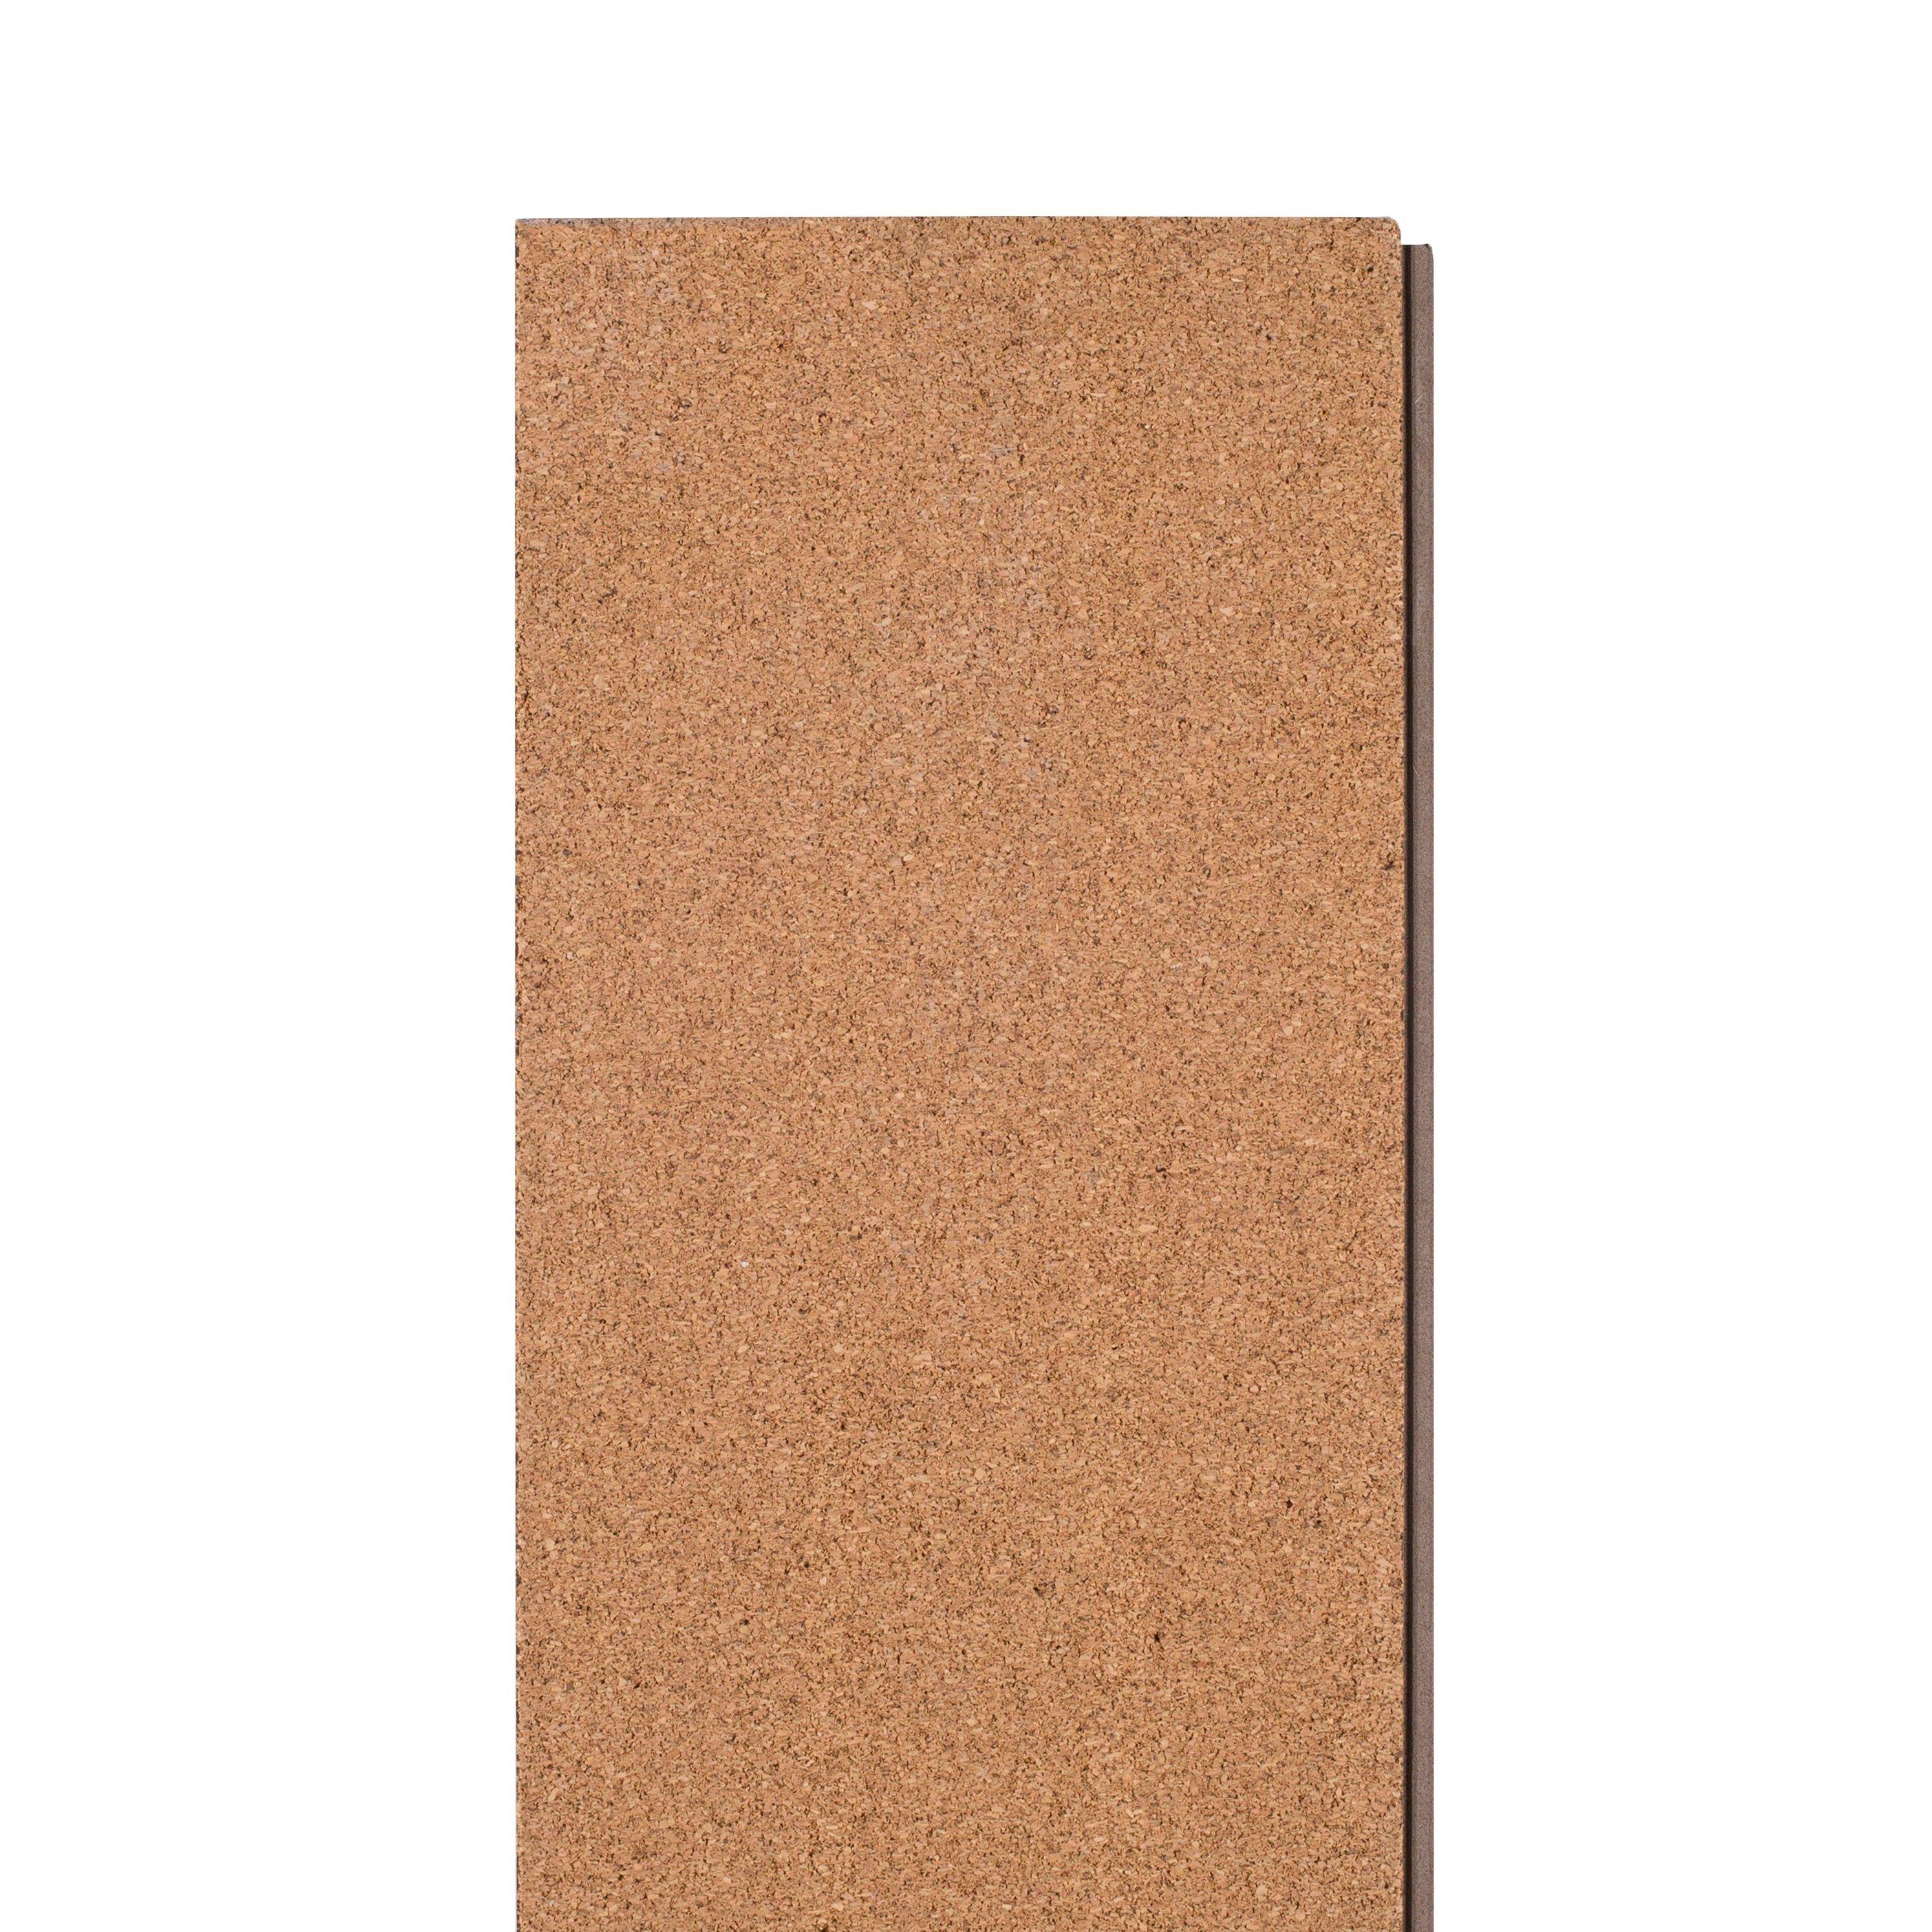 Spalted Exotic Rigid Core Luxury Vinyl Plank - Cork Back